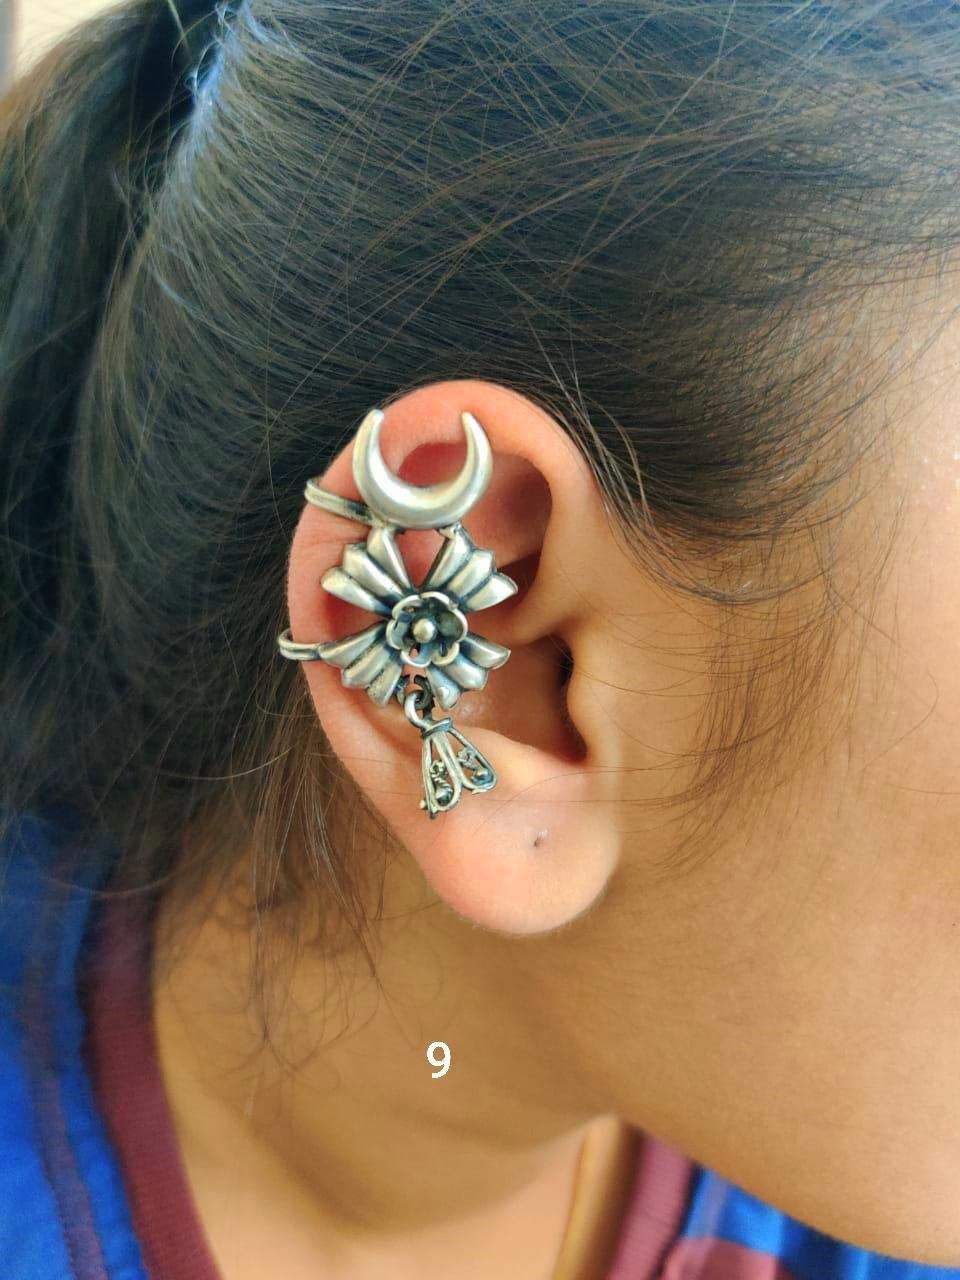 Handcrafted 925 sterling silver Ear cartilage ear plug, Ear clips earring fabulous customized bridesmaid women's upper ear jewelry s840 - TRIBAL ORNAMENTS